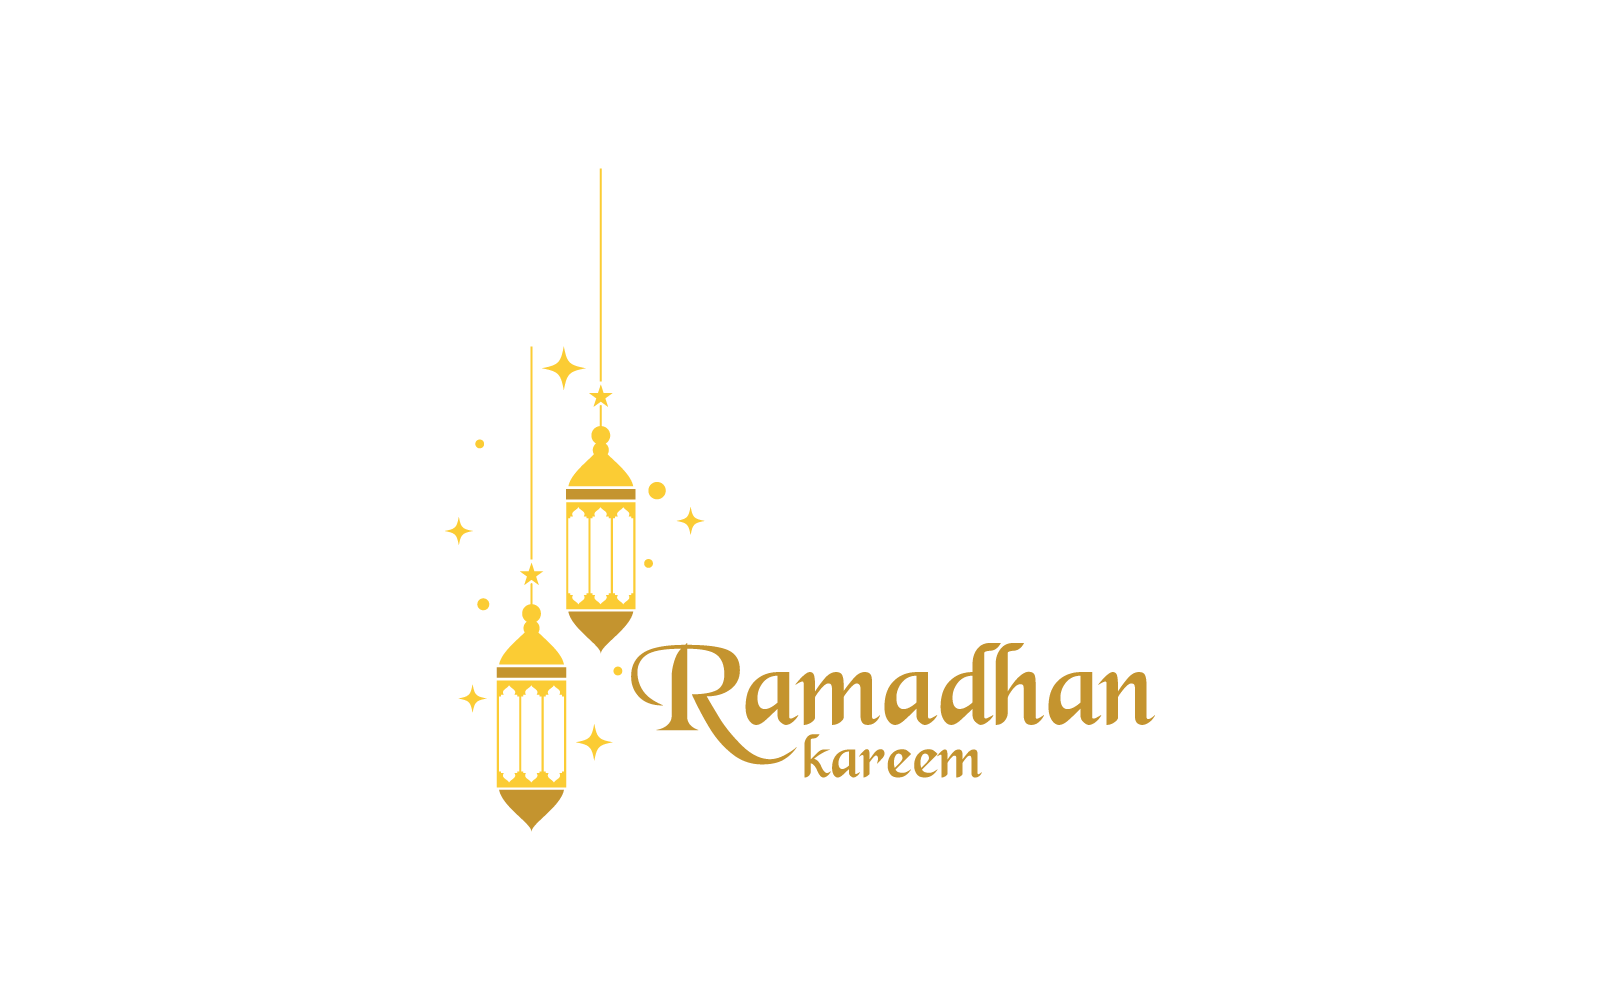 Ramadhan kareem logo icon vector template